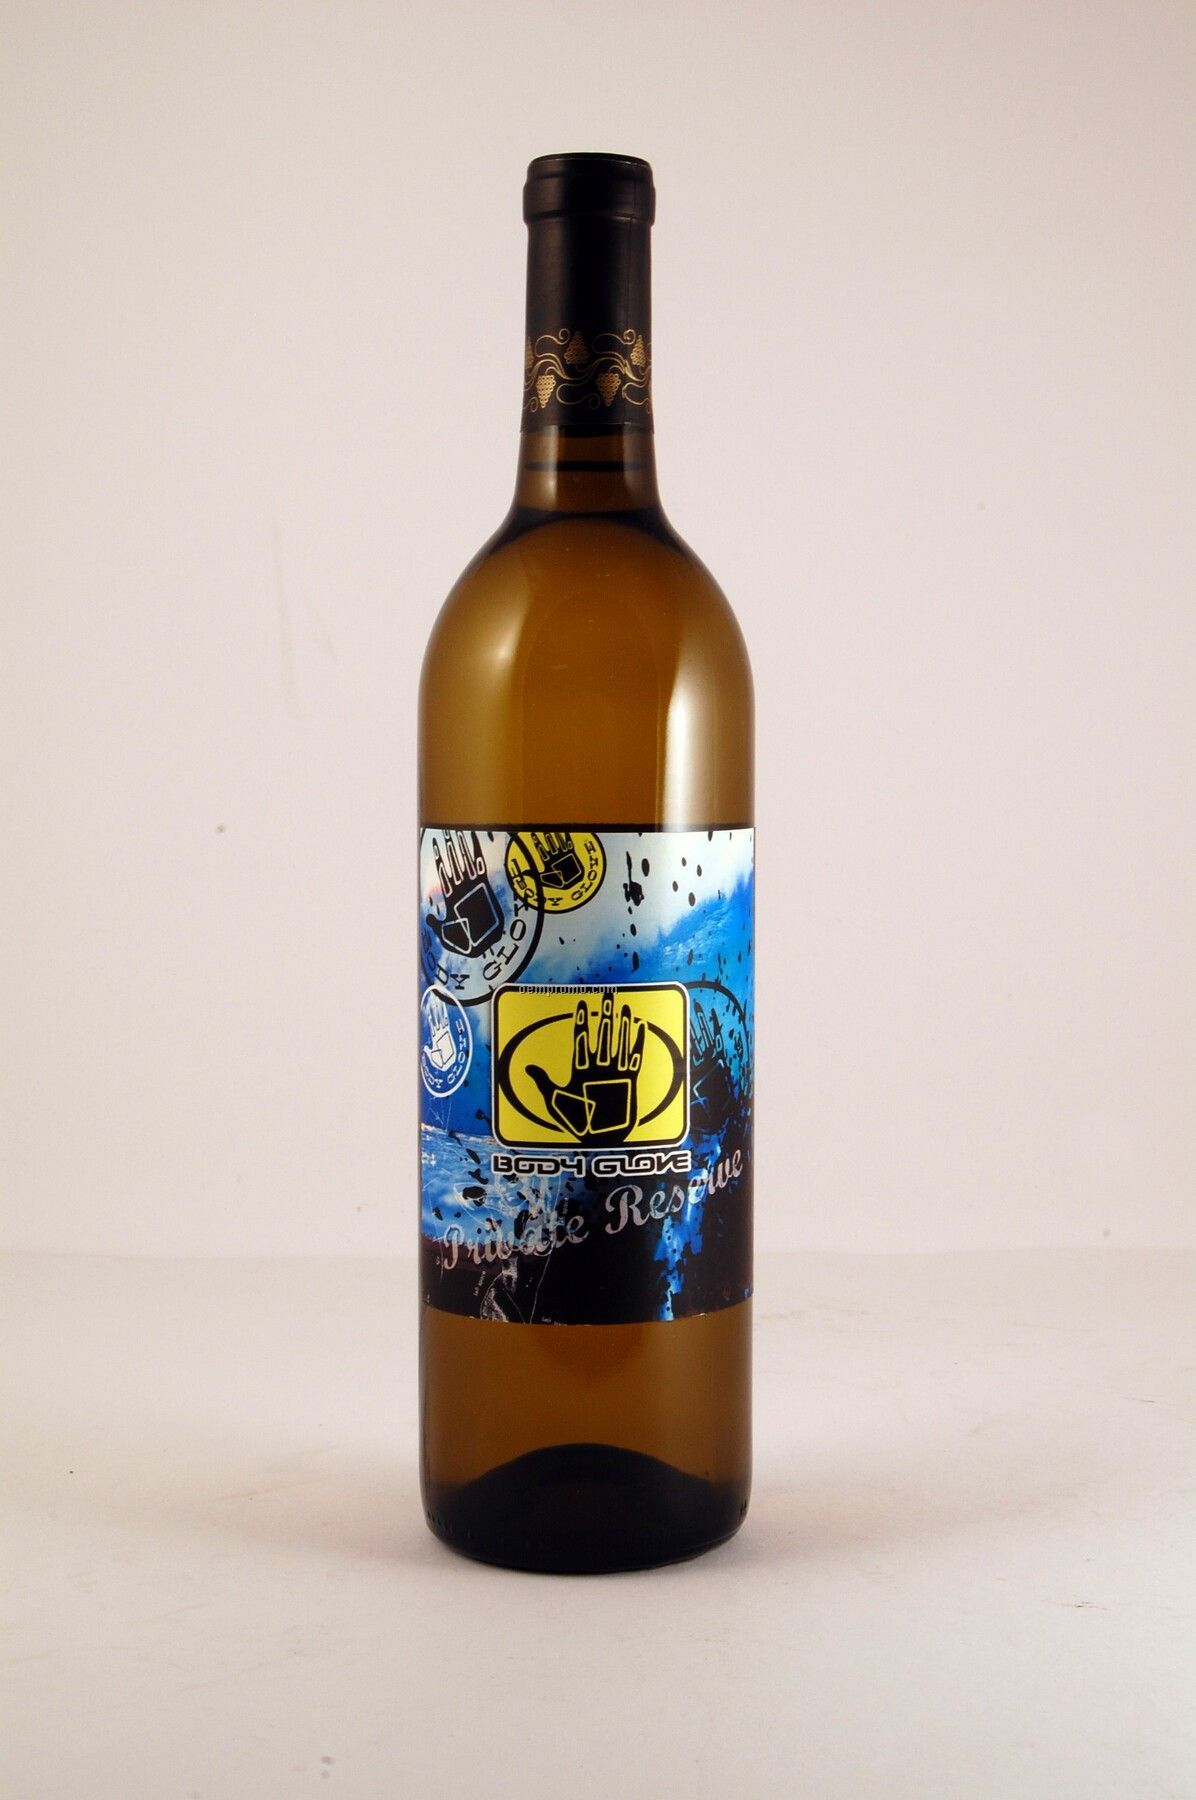 2008 Wv Meritage, Sonoma County Platinum Series (Custom Labeled Wine)